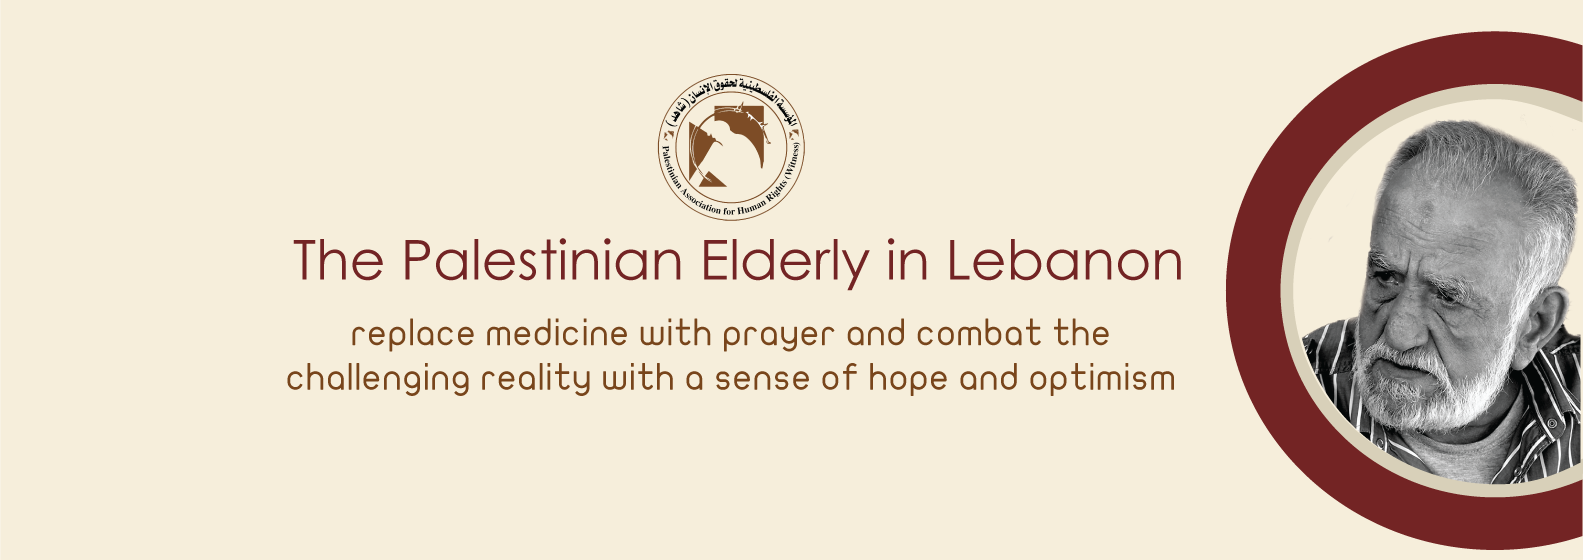 The Palestinian Elderly in Lebanon